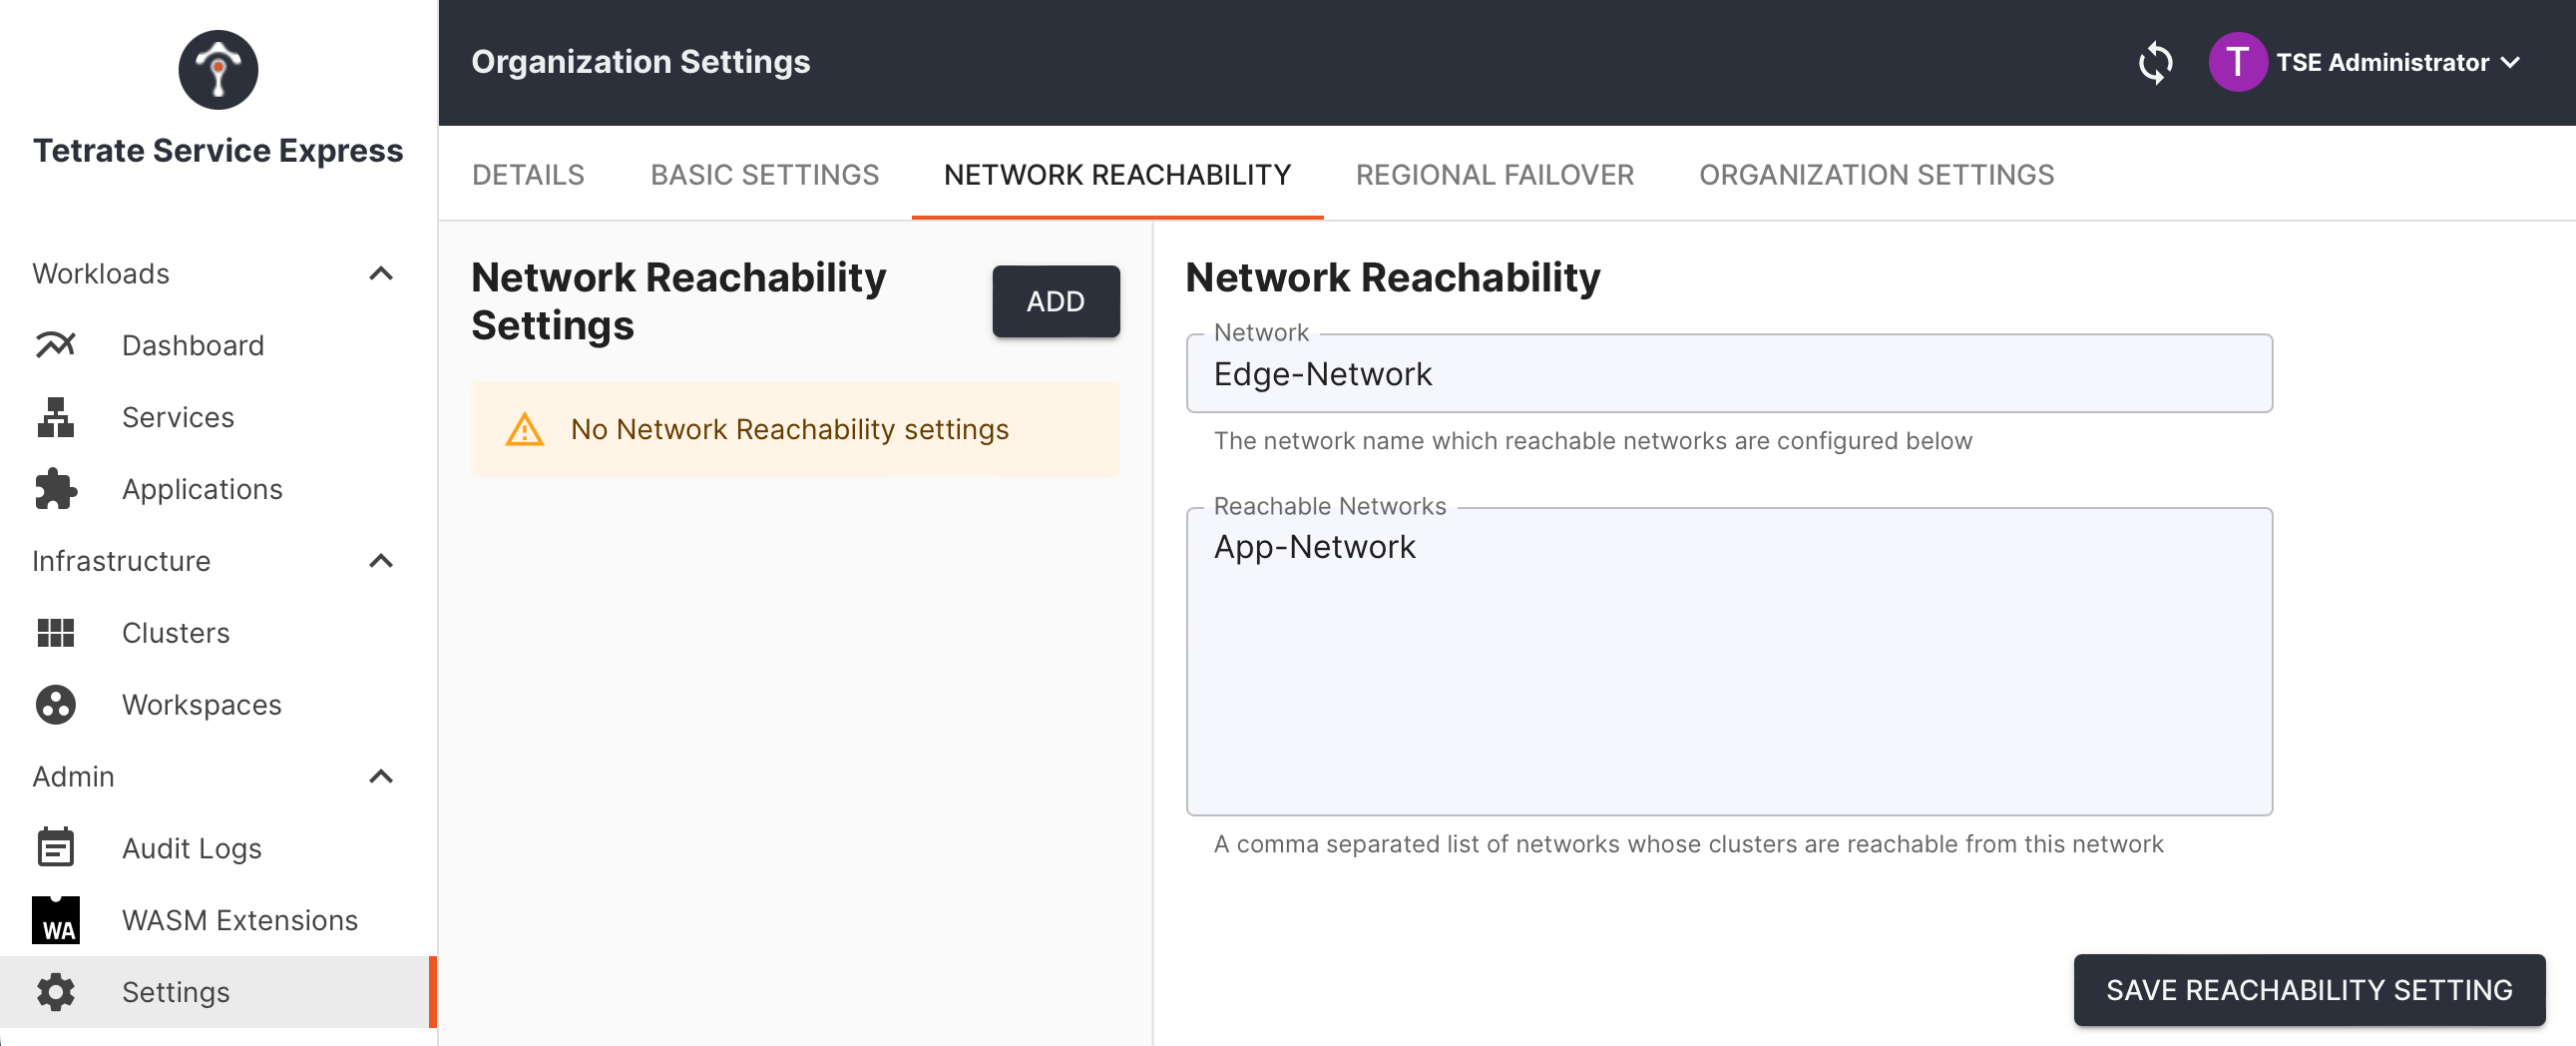 Define reachability settings so that Edge-Network can send traffic to App-Network